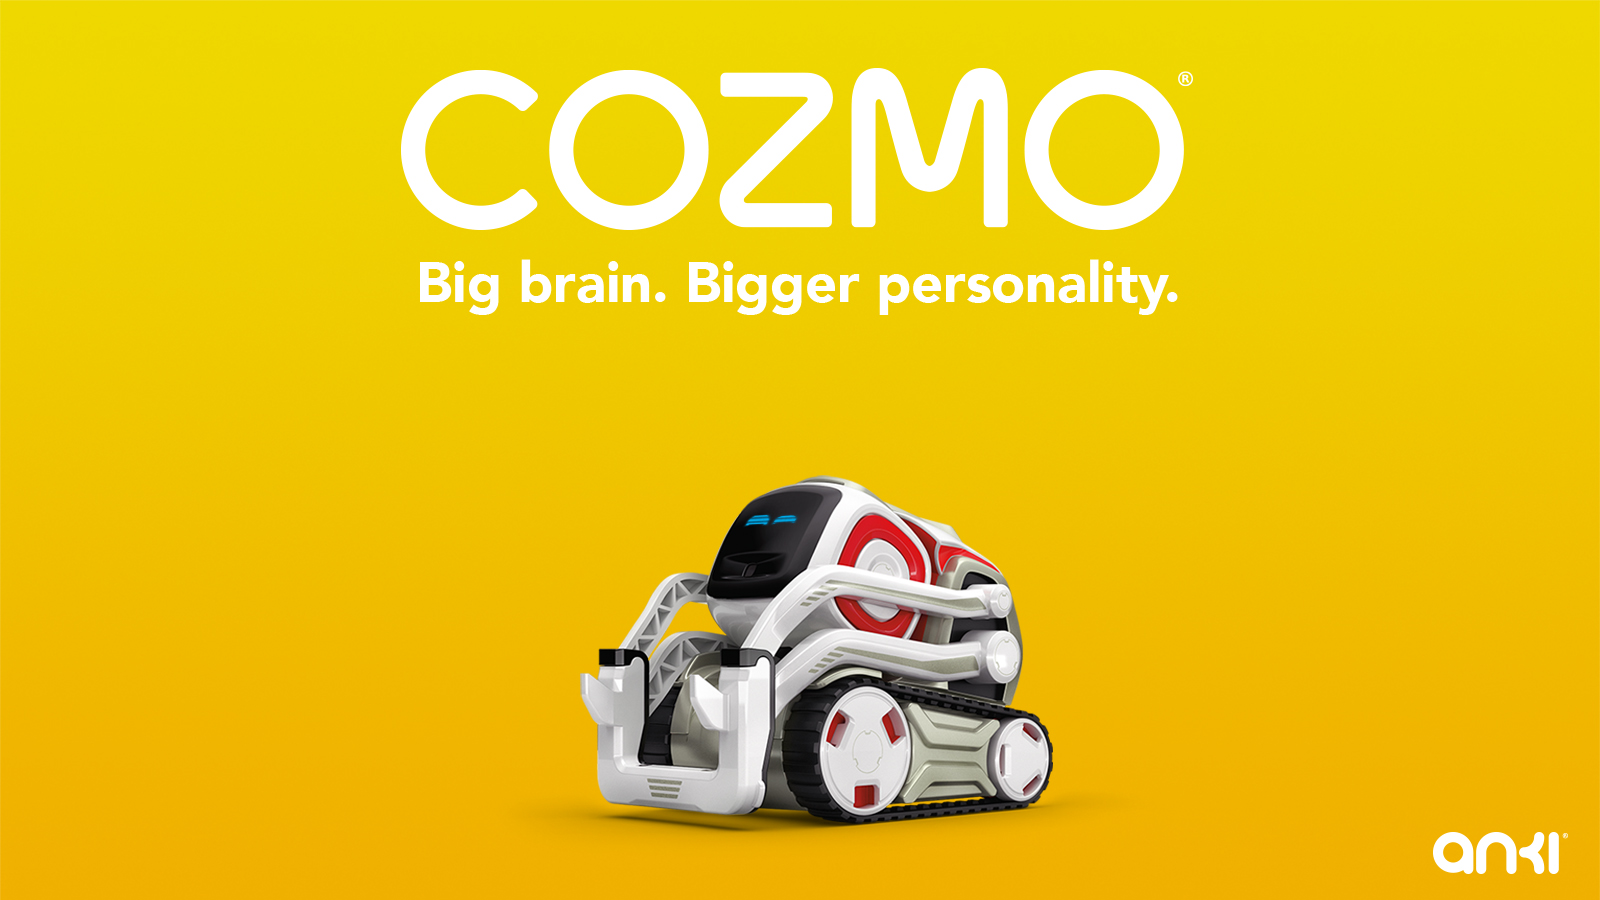 Cozmo is next Anki robot